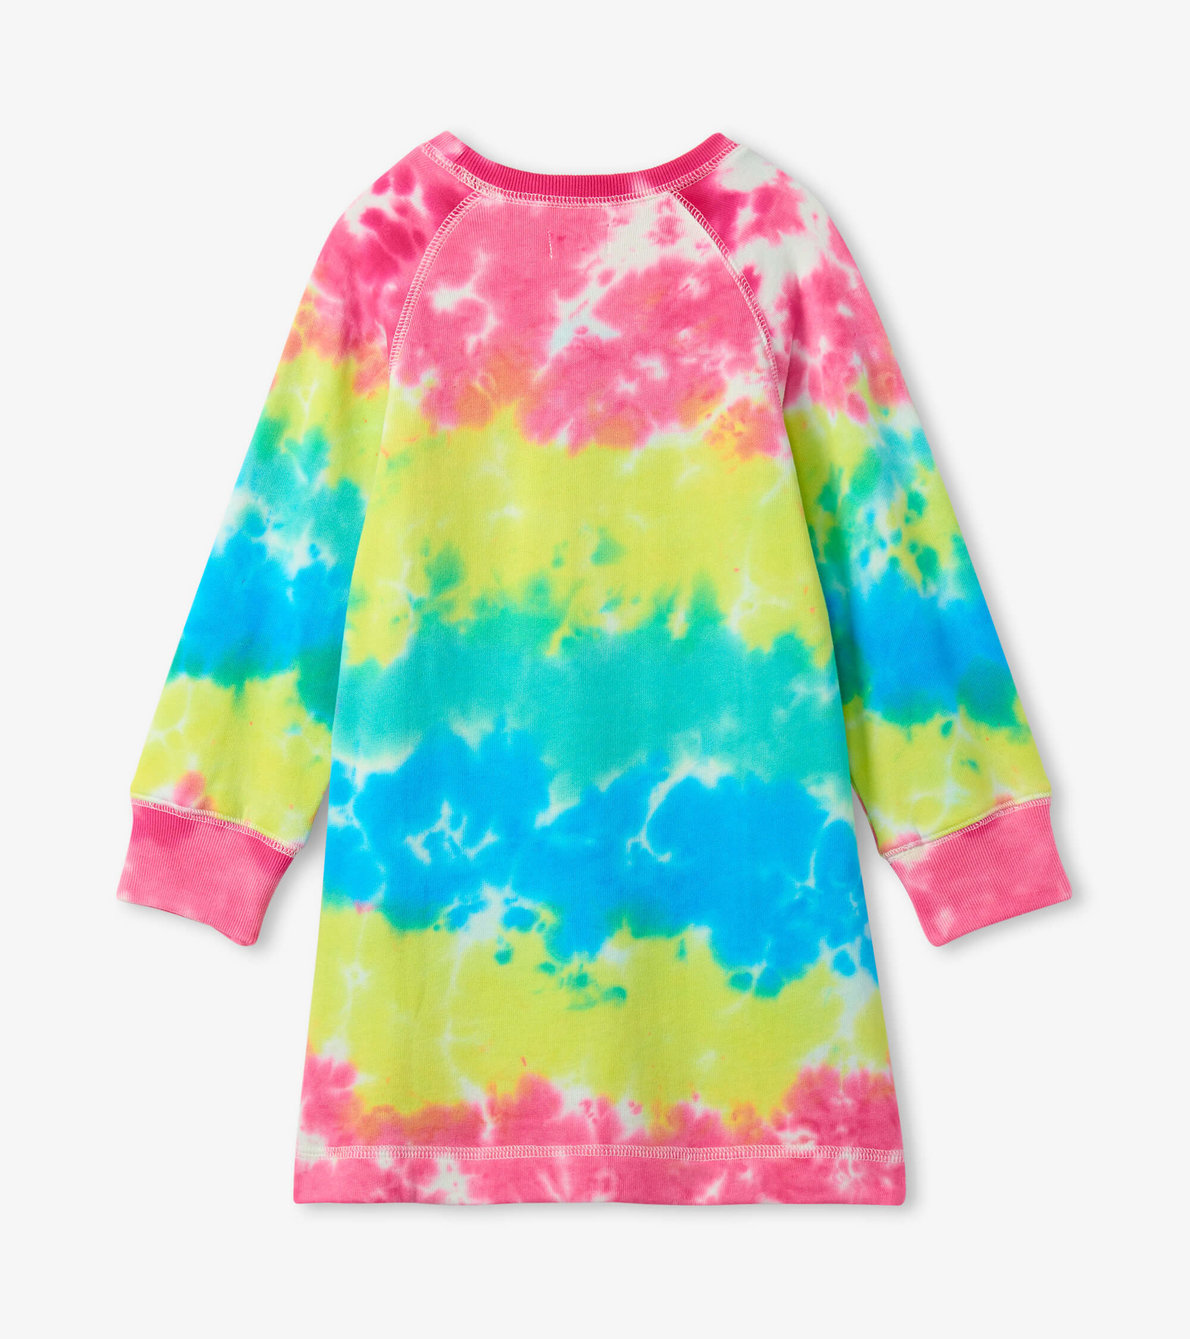 View larger image of Rainbow Tie Dye Sweatshirt Dress